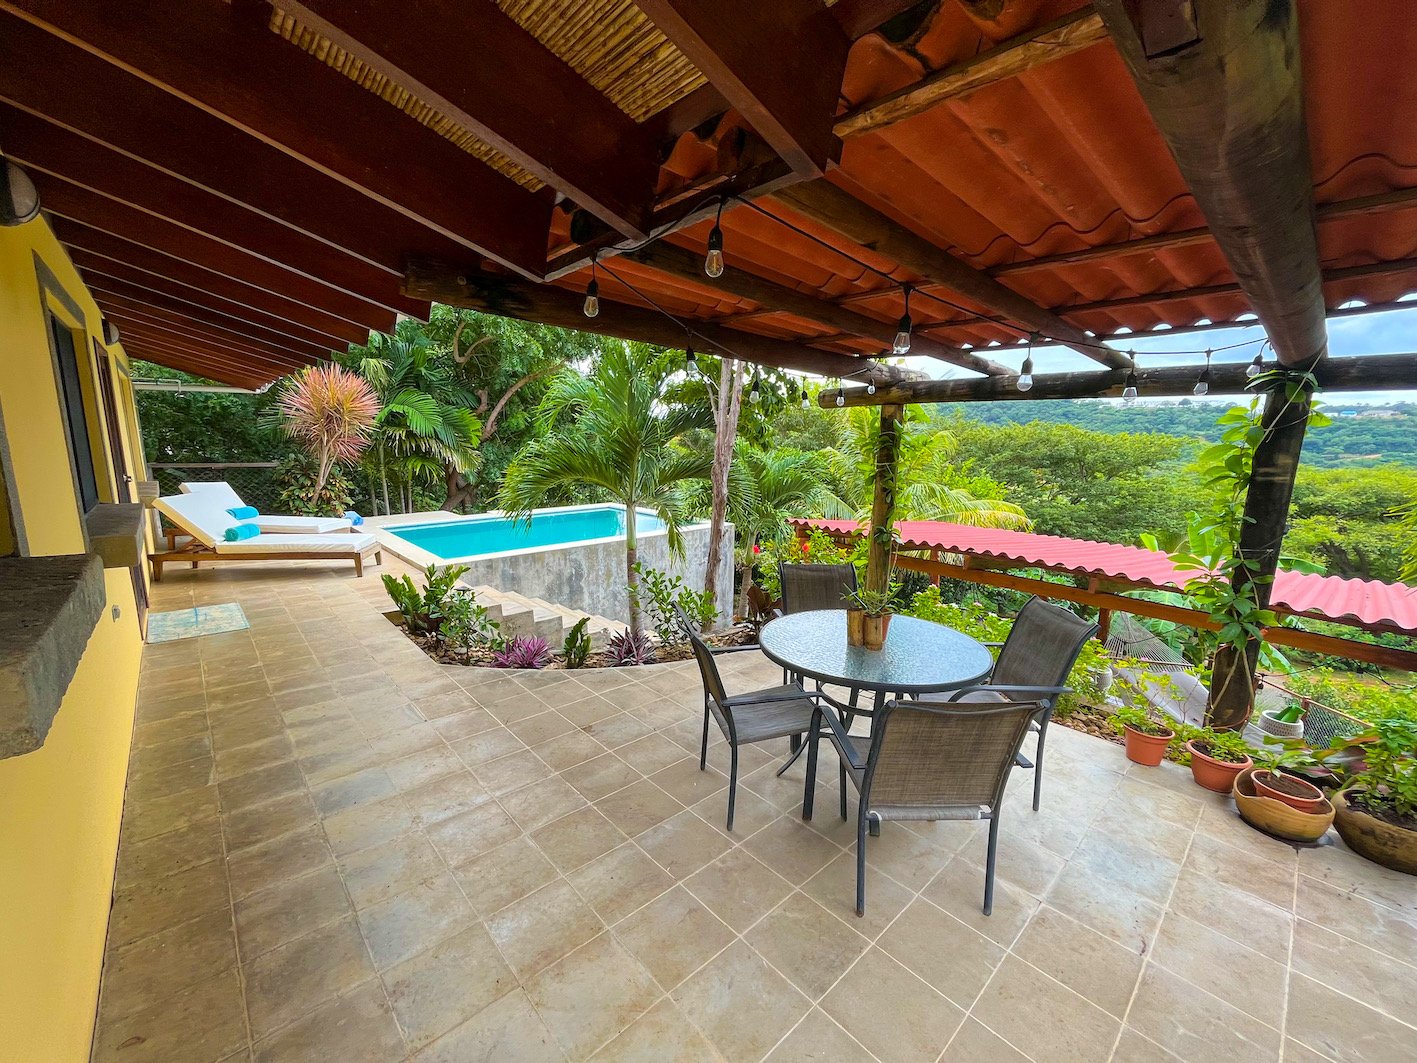 Three Bedroom Ocean View Home With Pool for Sale San Juan Del Sur 14.JPEG